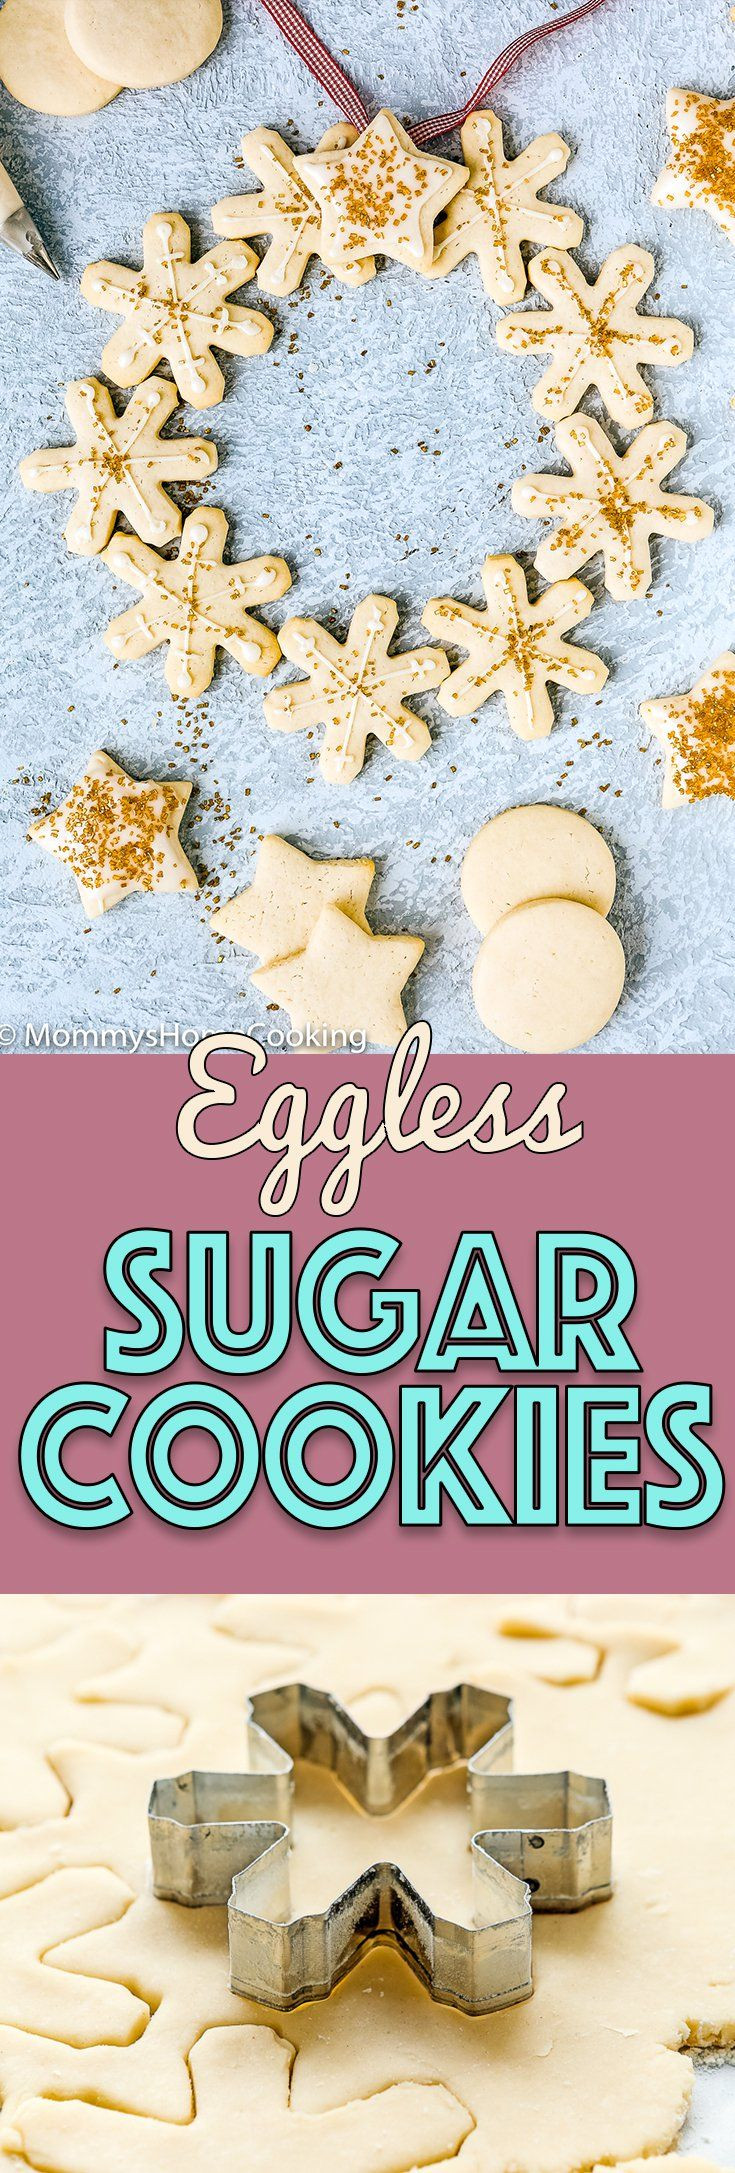 Sugar Cookies Recipe No Eggs
 Eggless Sugar Cookies Recipe